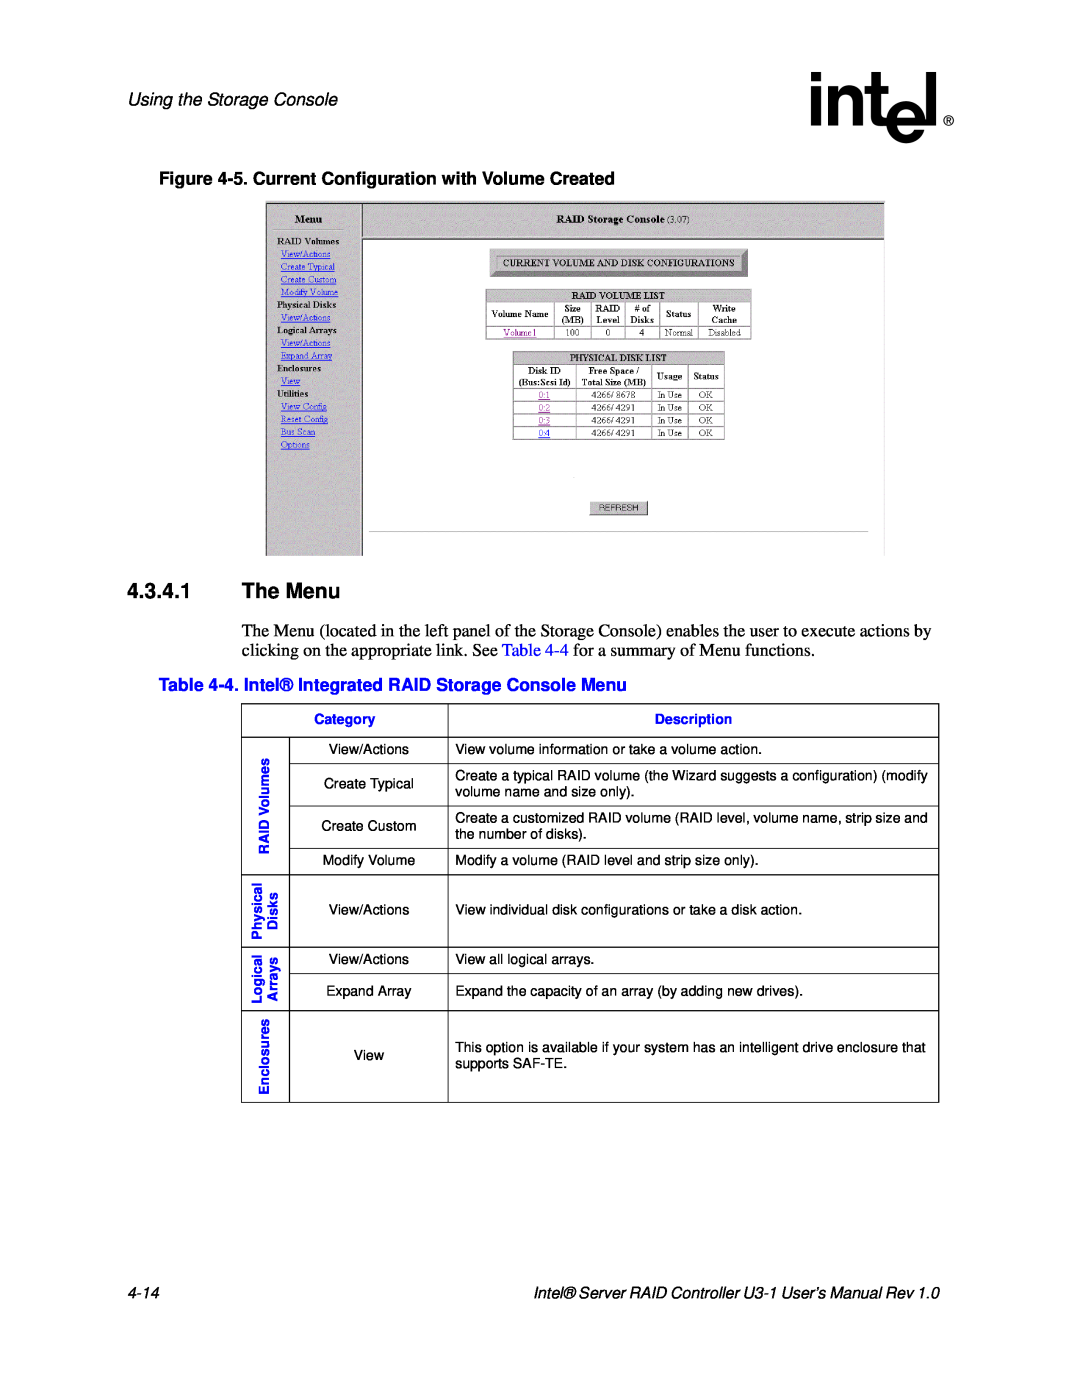 Intel SRCU31 user manual 4.3.4.1The Menu, Using the Storage Console, Category, Description 